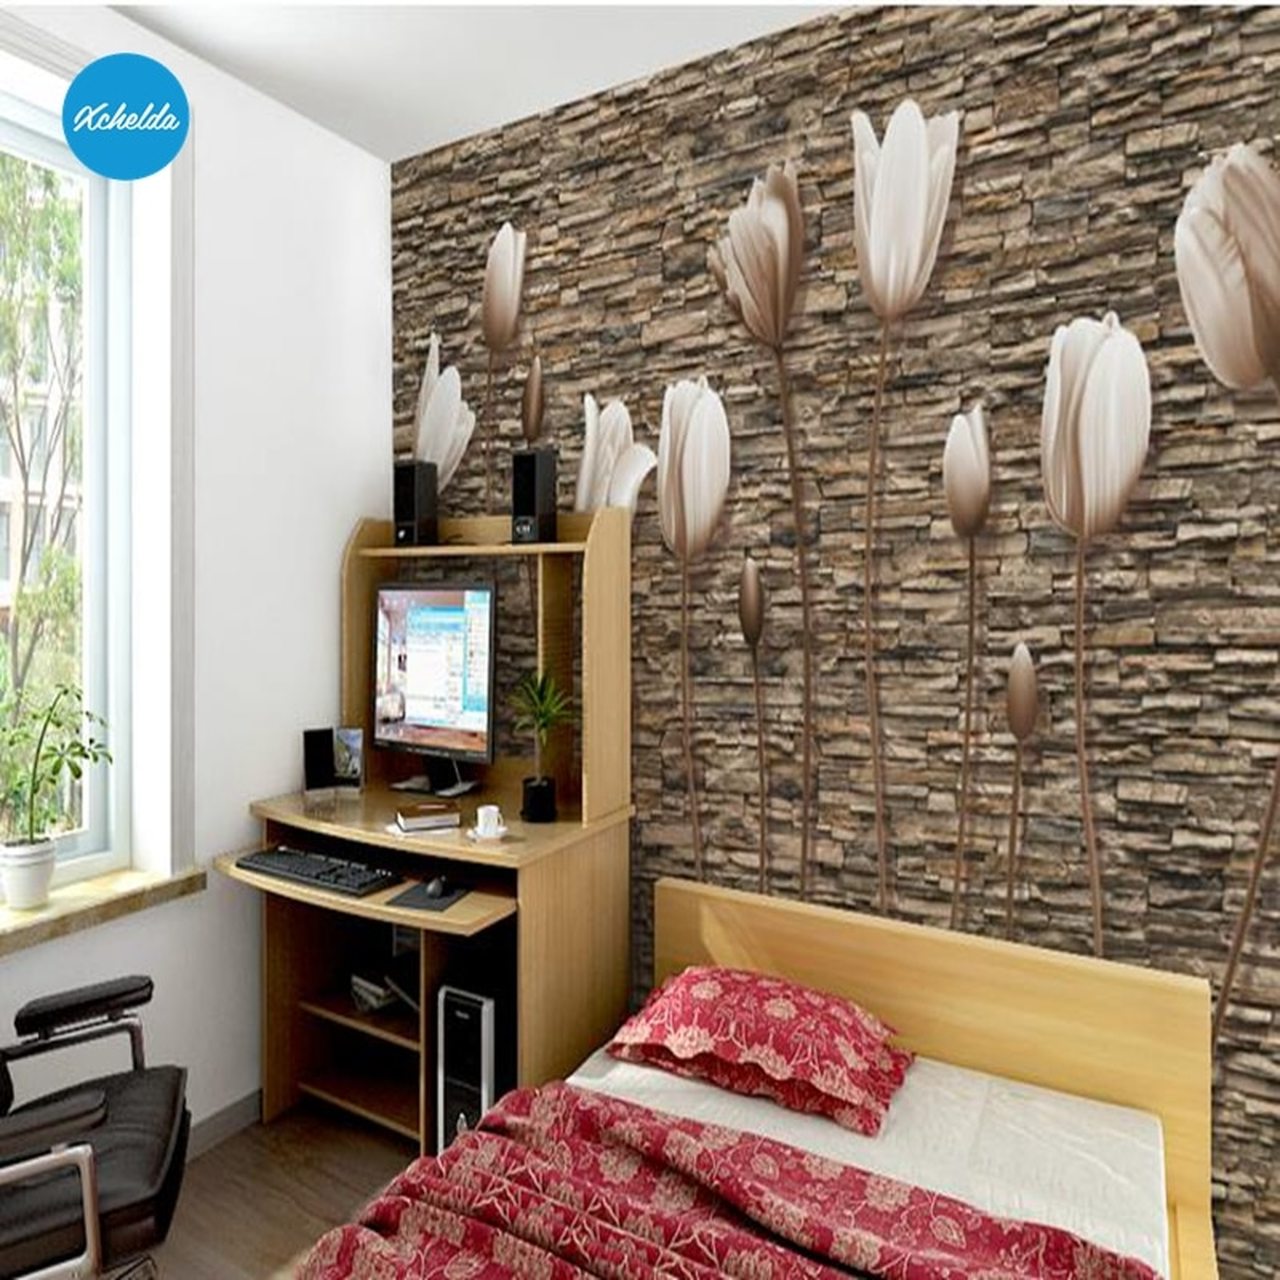 Bedroom Room Wallpaper Design - HD Wallpaper 